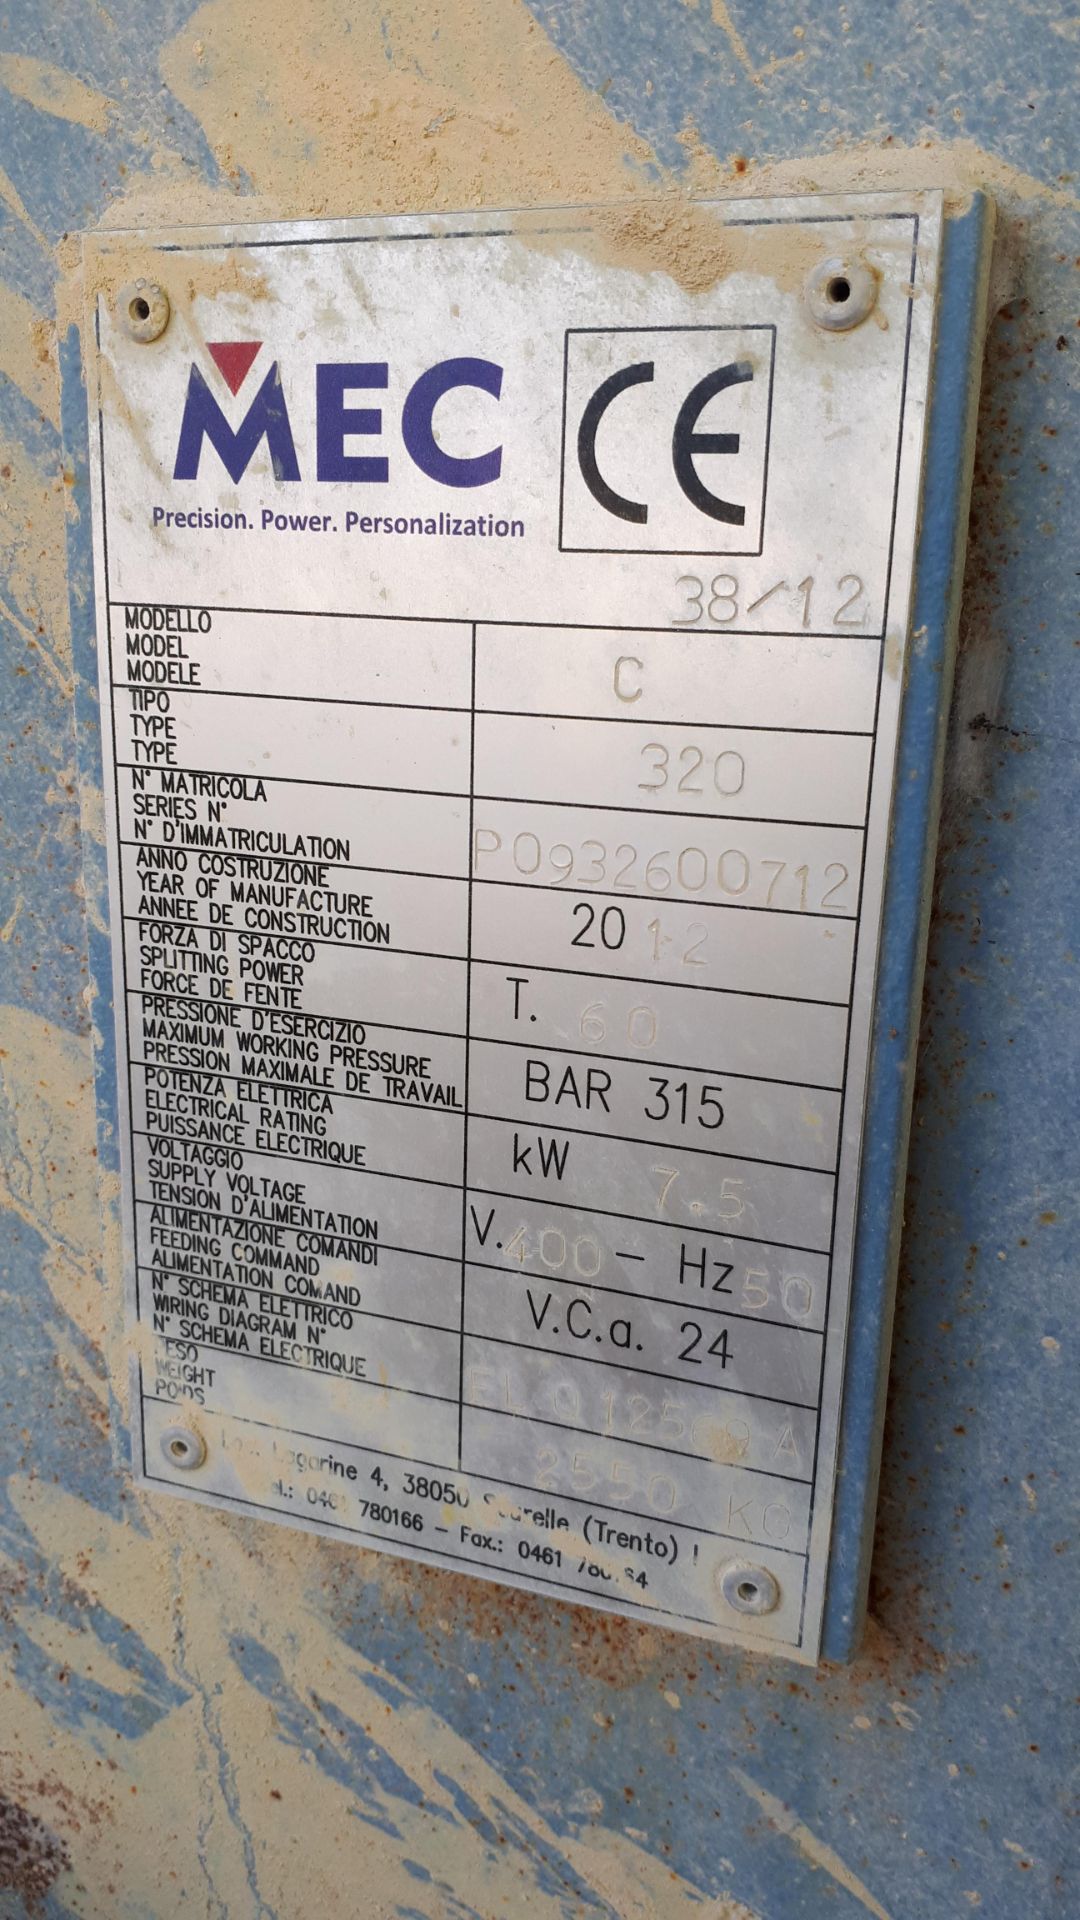 MEC C320 Stone Splitter/Guillotine machine, Serial Number P0932600712 (2012). Damaged operator - Image 5 of 20